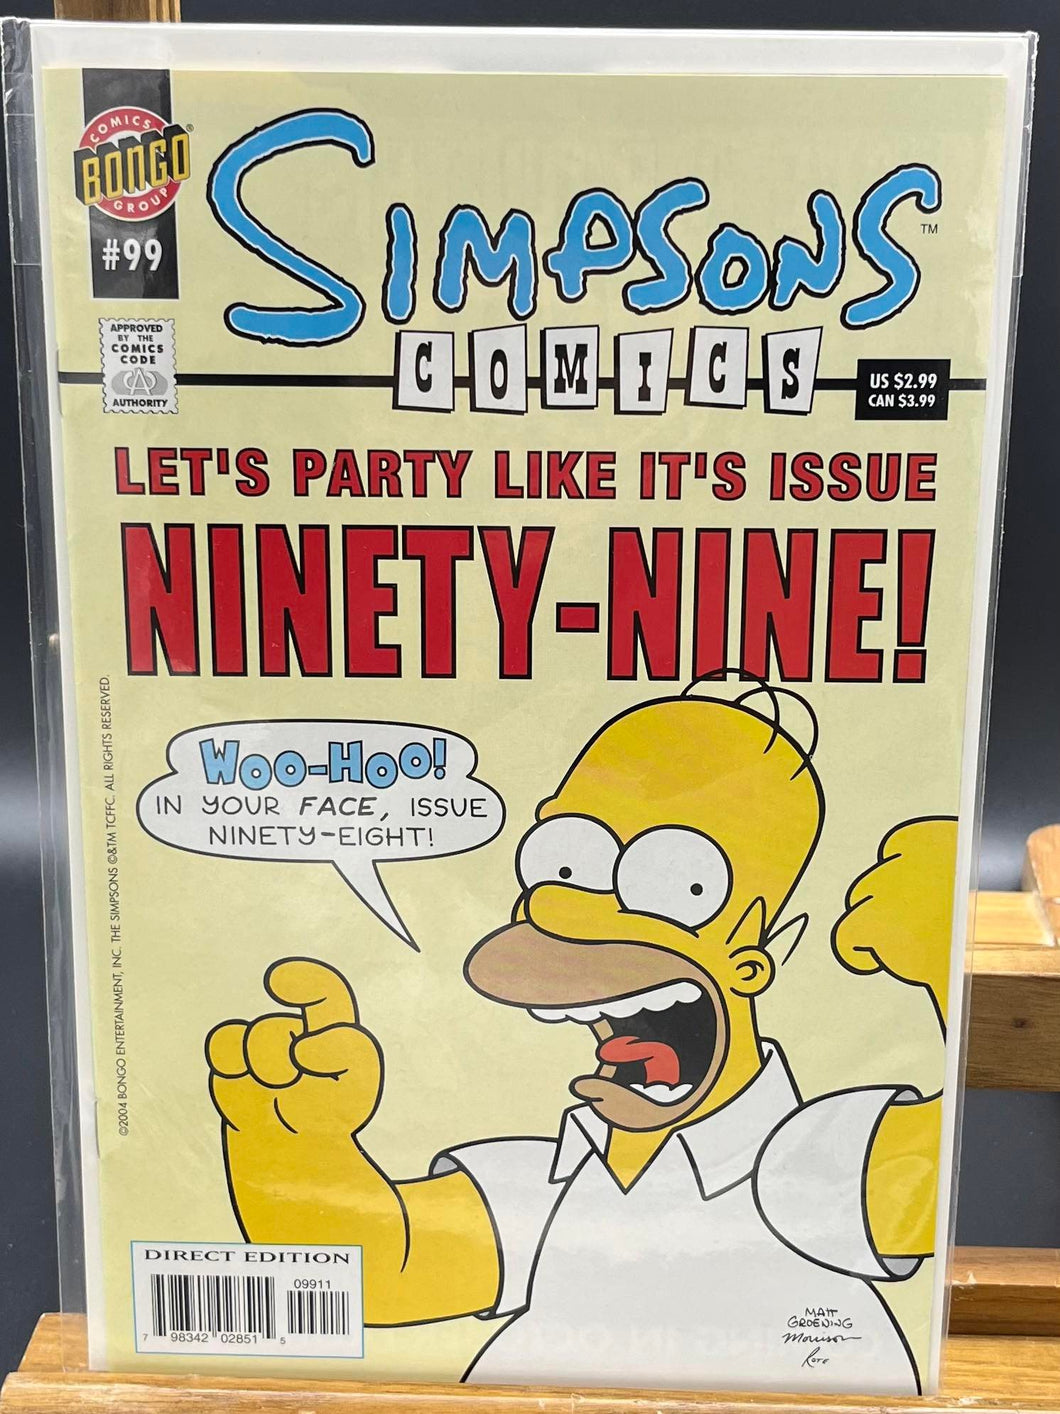 Bongo Simpsons Comics #99 - Near Mint/Unread